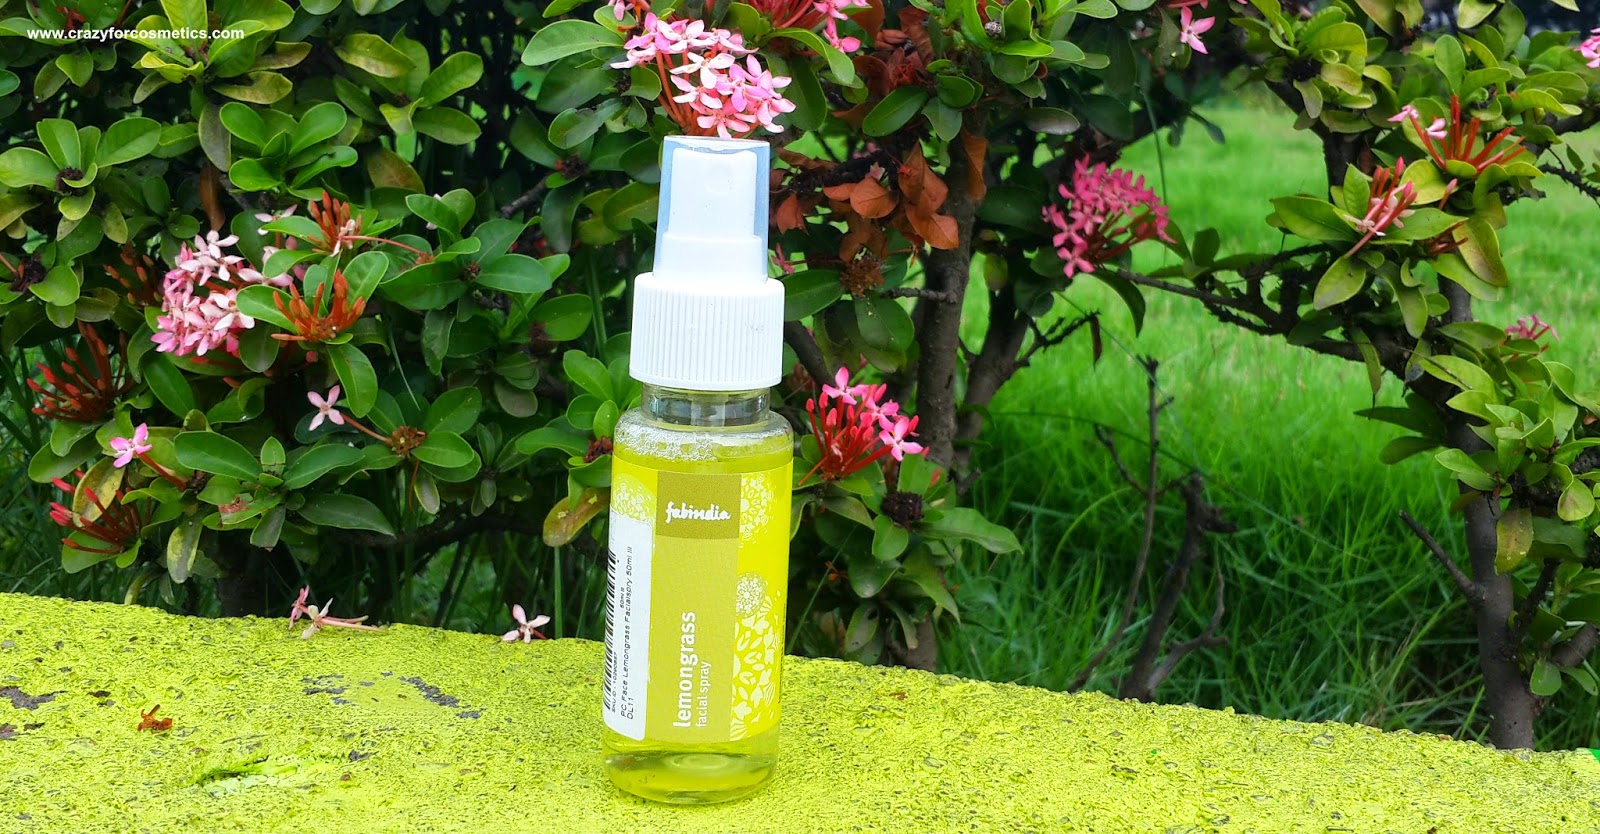 fabindia lemongrass facial spray benefits